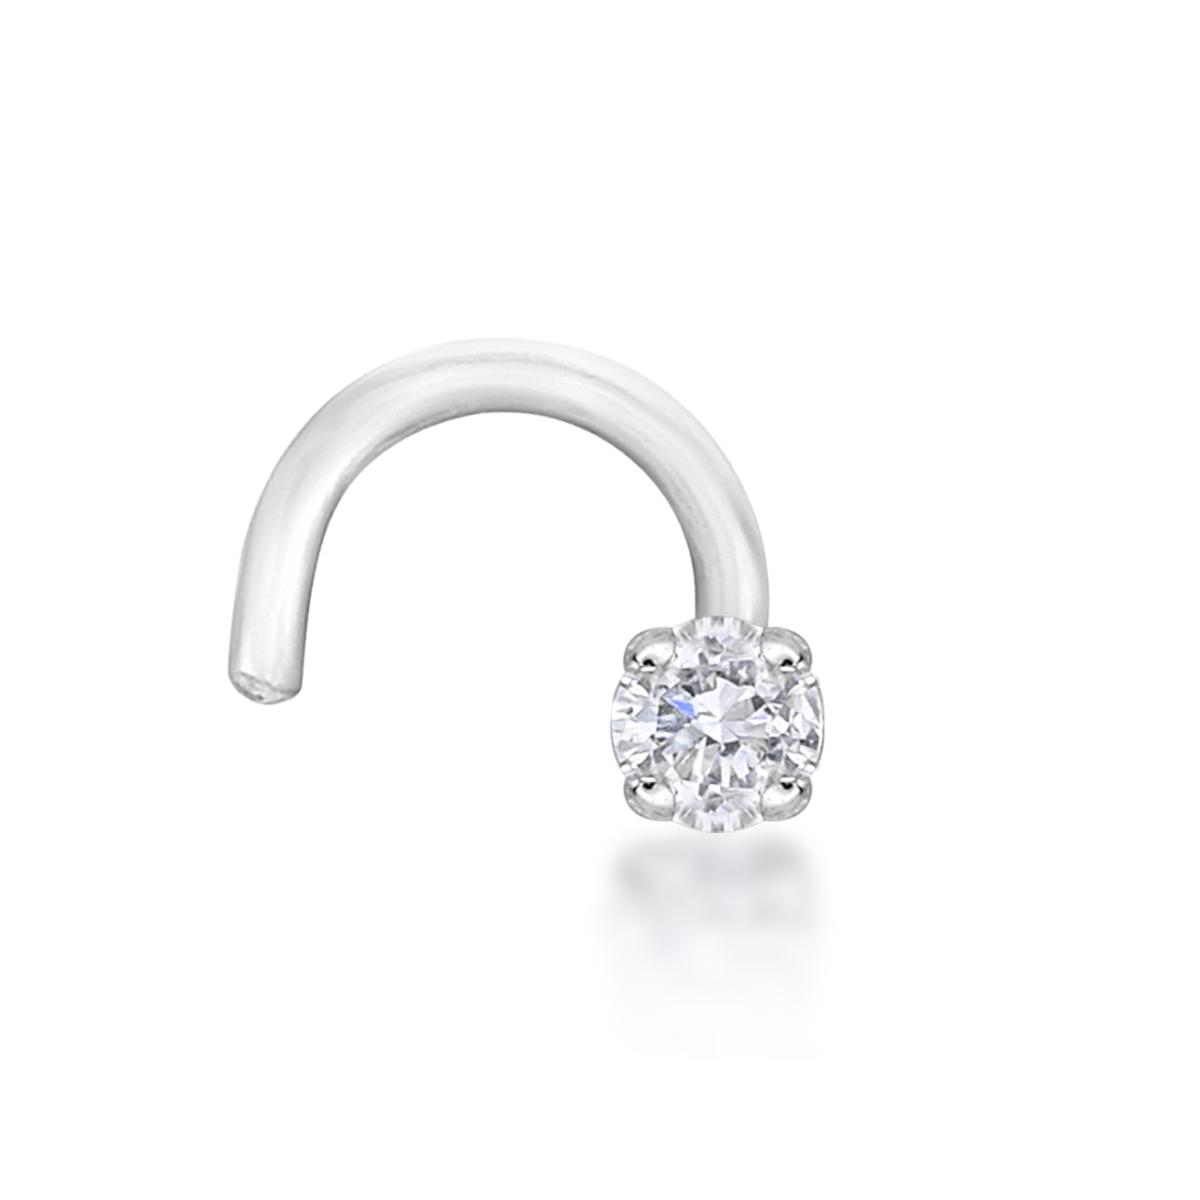 Lavari Jewelers Women’s Diamond Curve Stud Nose Ring, 14K White Gold, .02 Carat, 22 Gauge, 1.7 MM